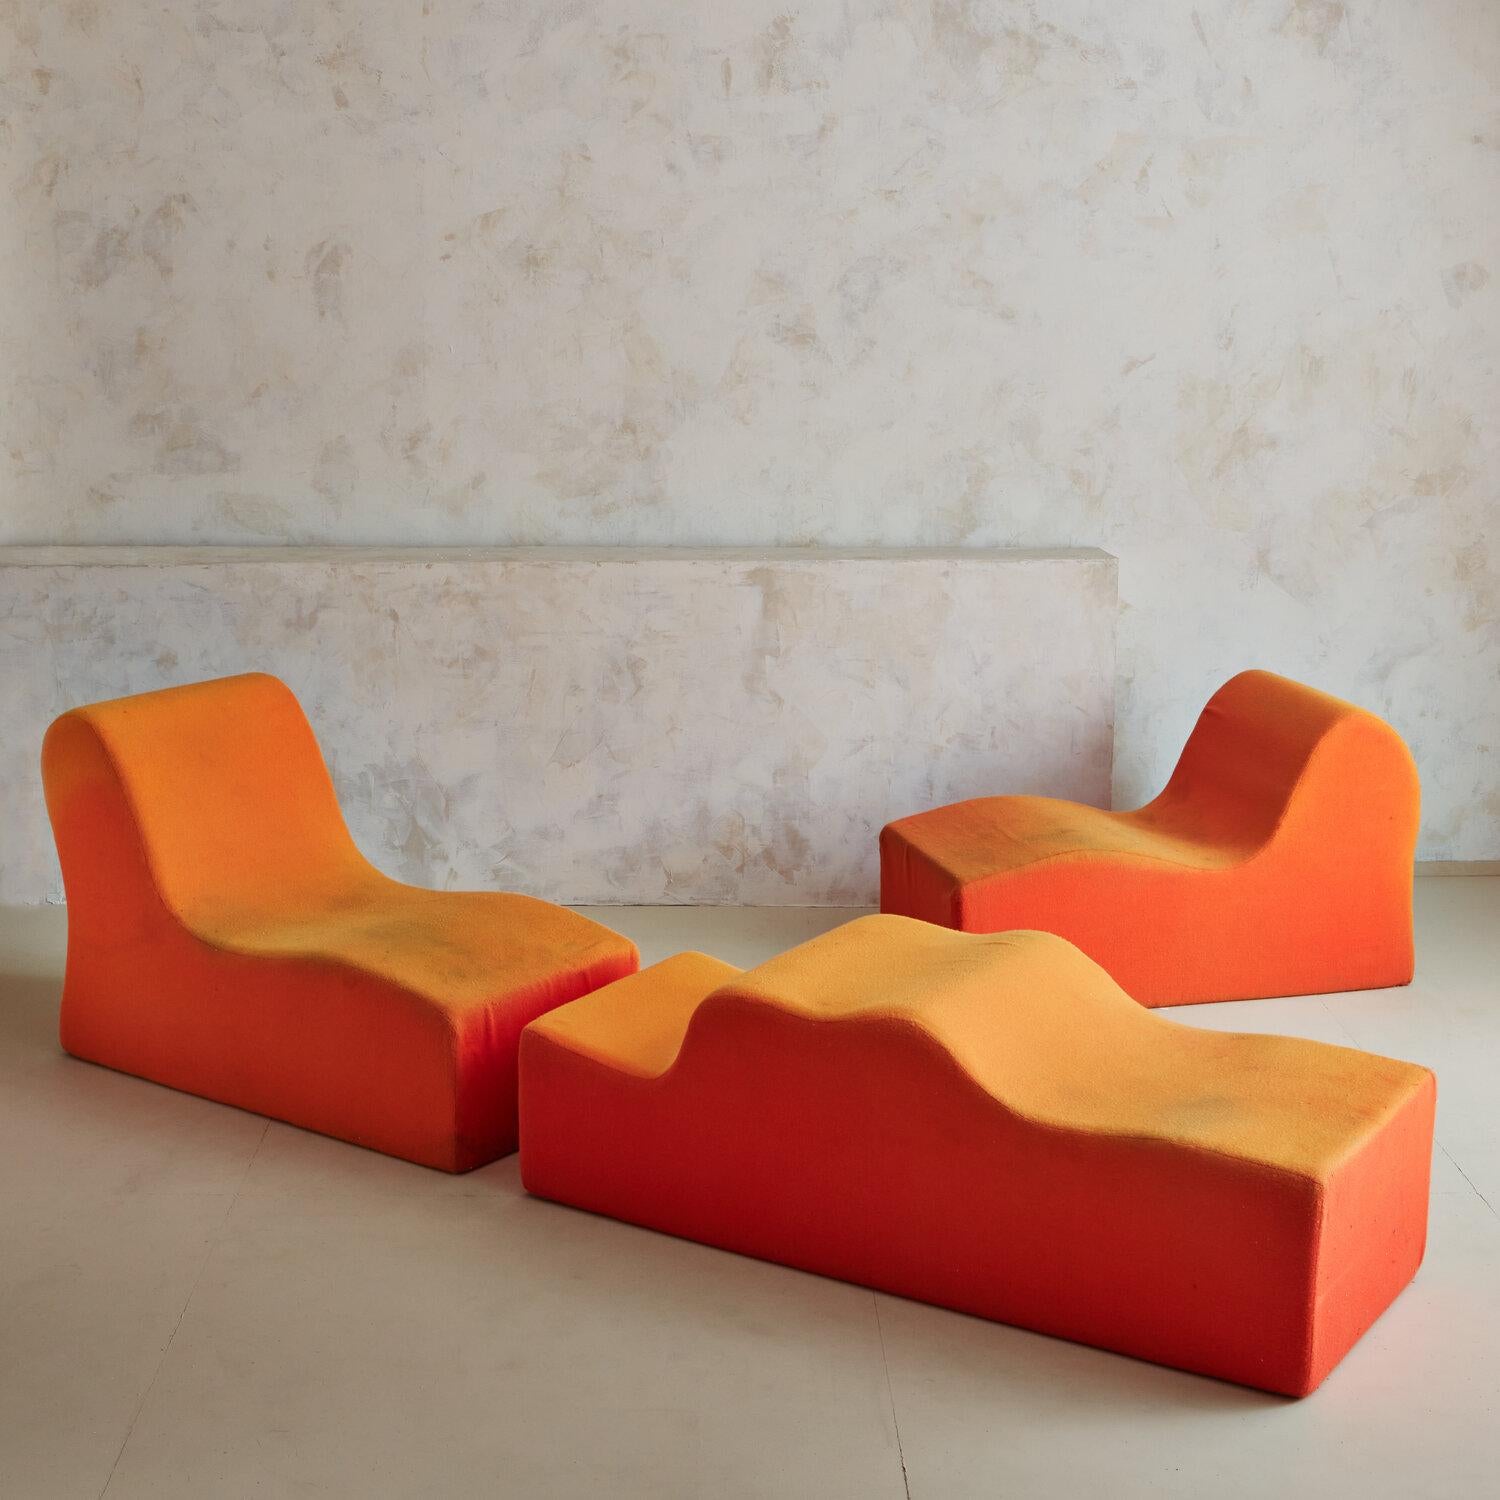 Foam “Malitte” Seating System by Roberto Sebastián Matta, Italy 1966